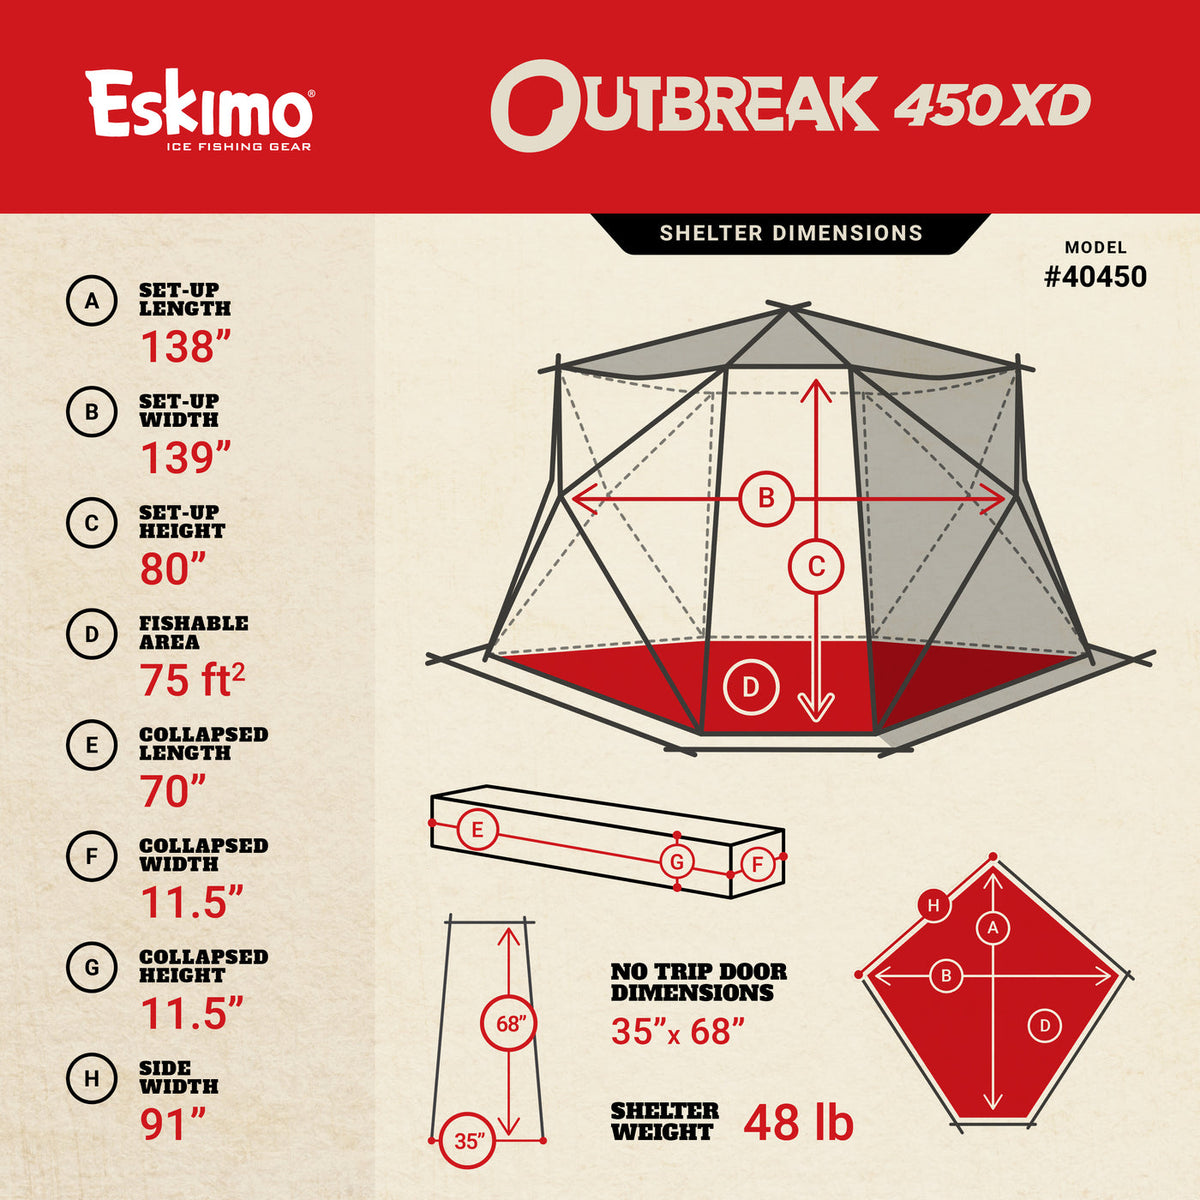 Eskimo Outbreak 450XD Plaid - LOTWSHQ